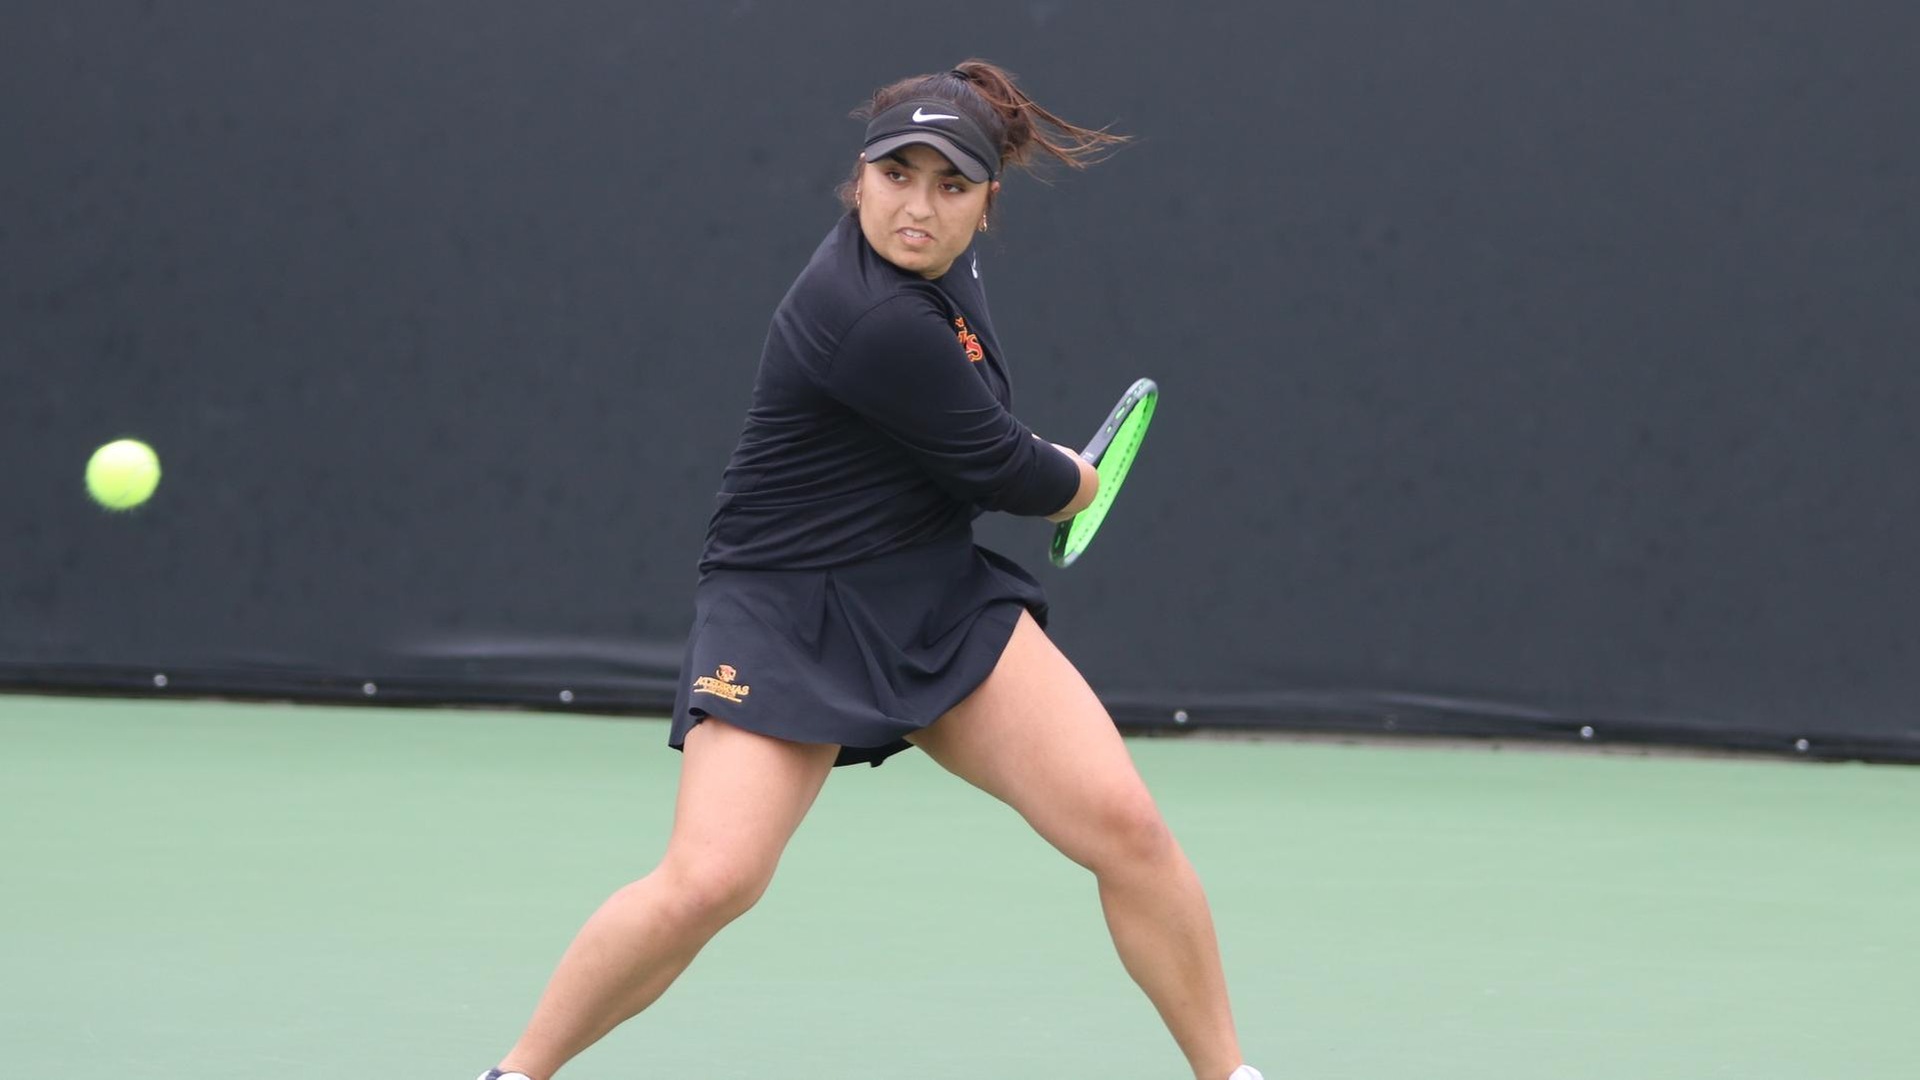 Alisha Chulani won 8-0 in doubles, and 6-0, 6-1 in singles